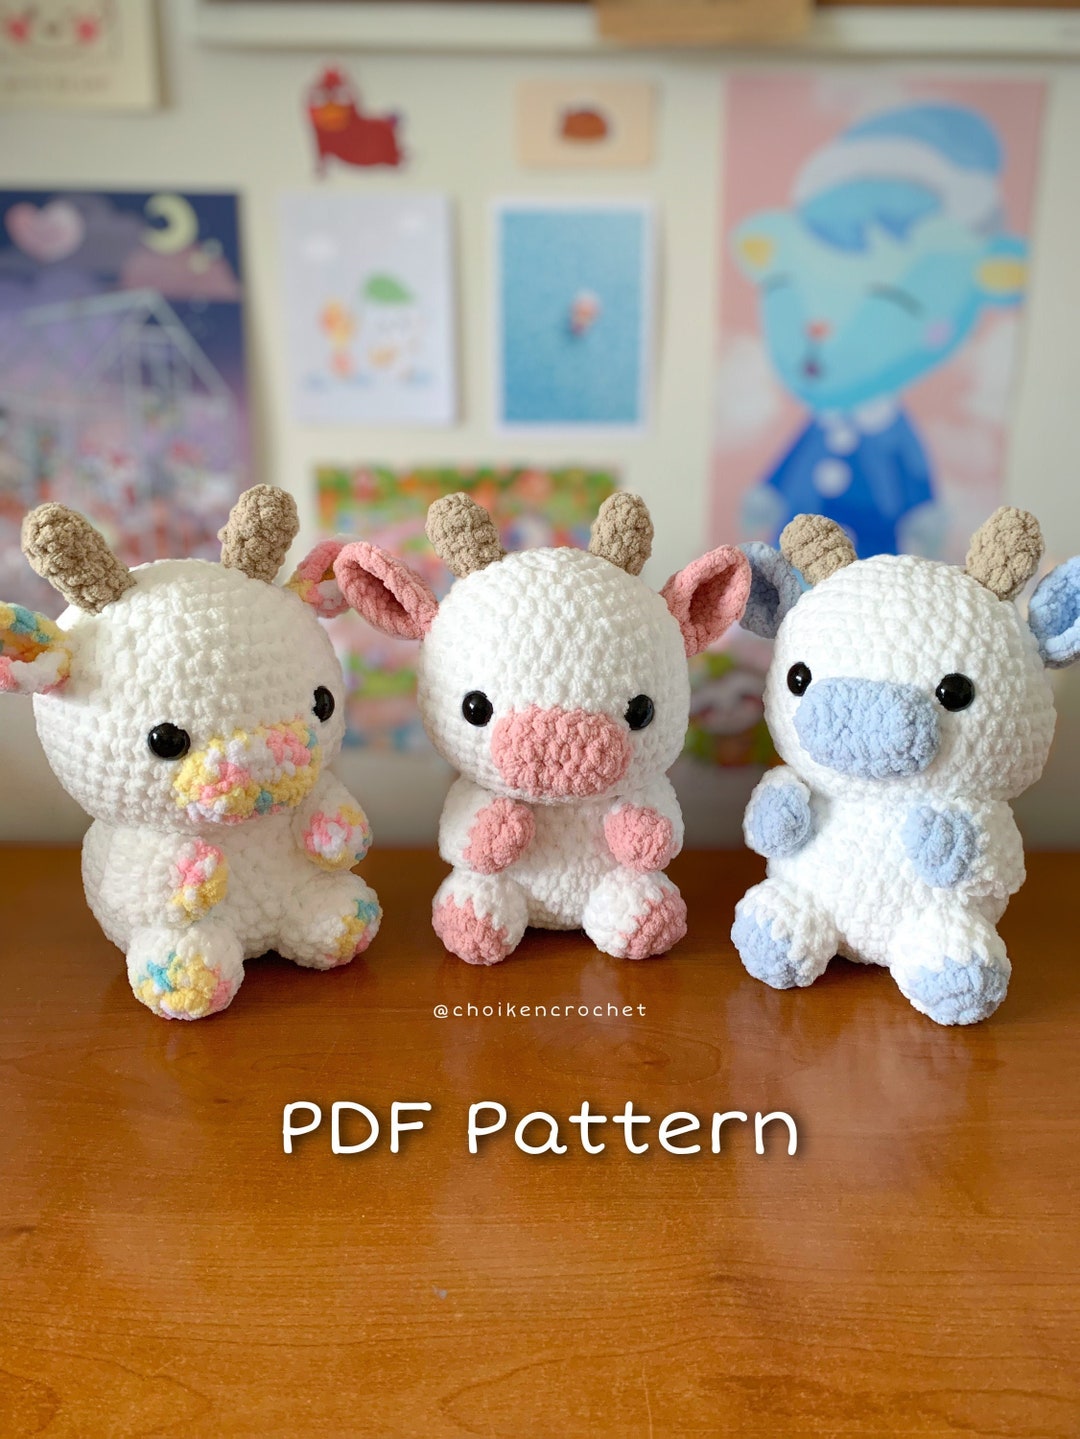 Crochet cow pattern Pattern bundle Crochet plush amigurumi c - Inspire  Uplift